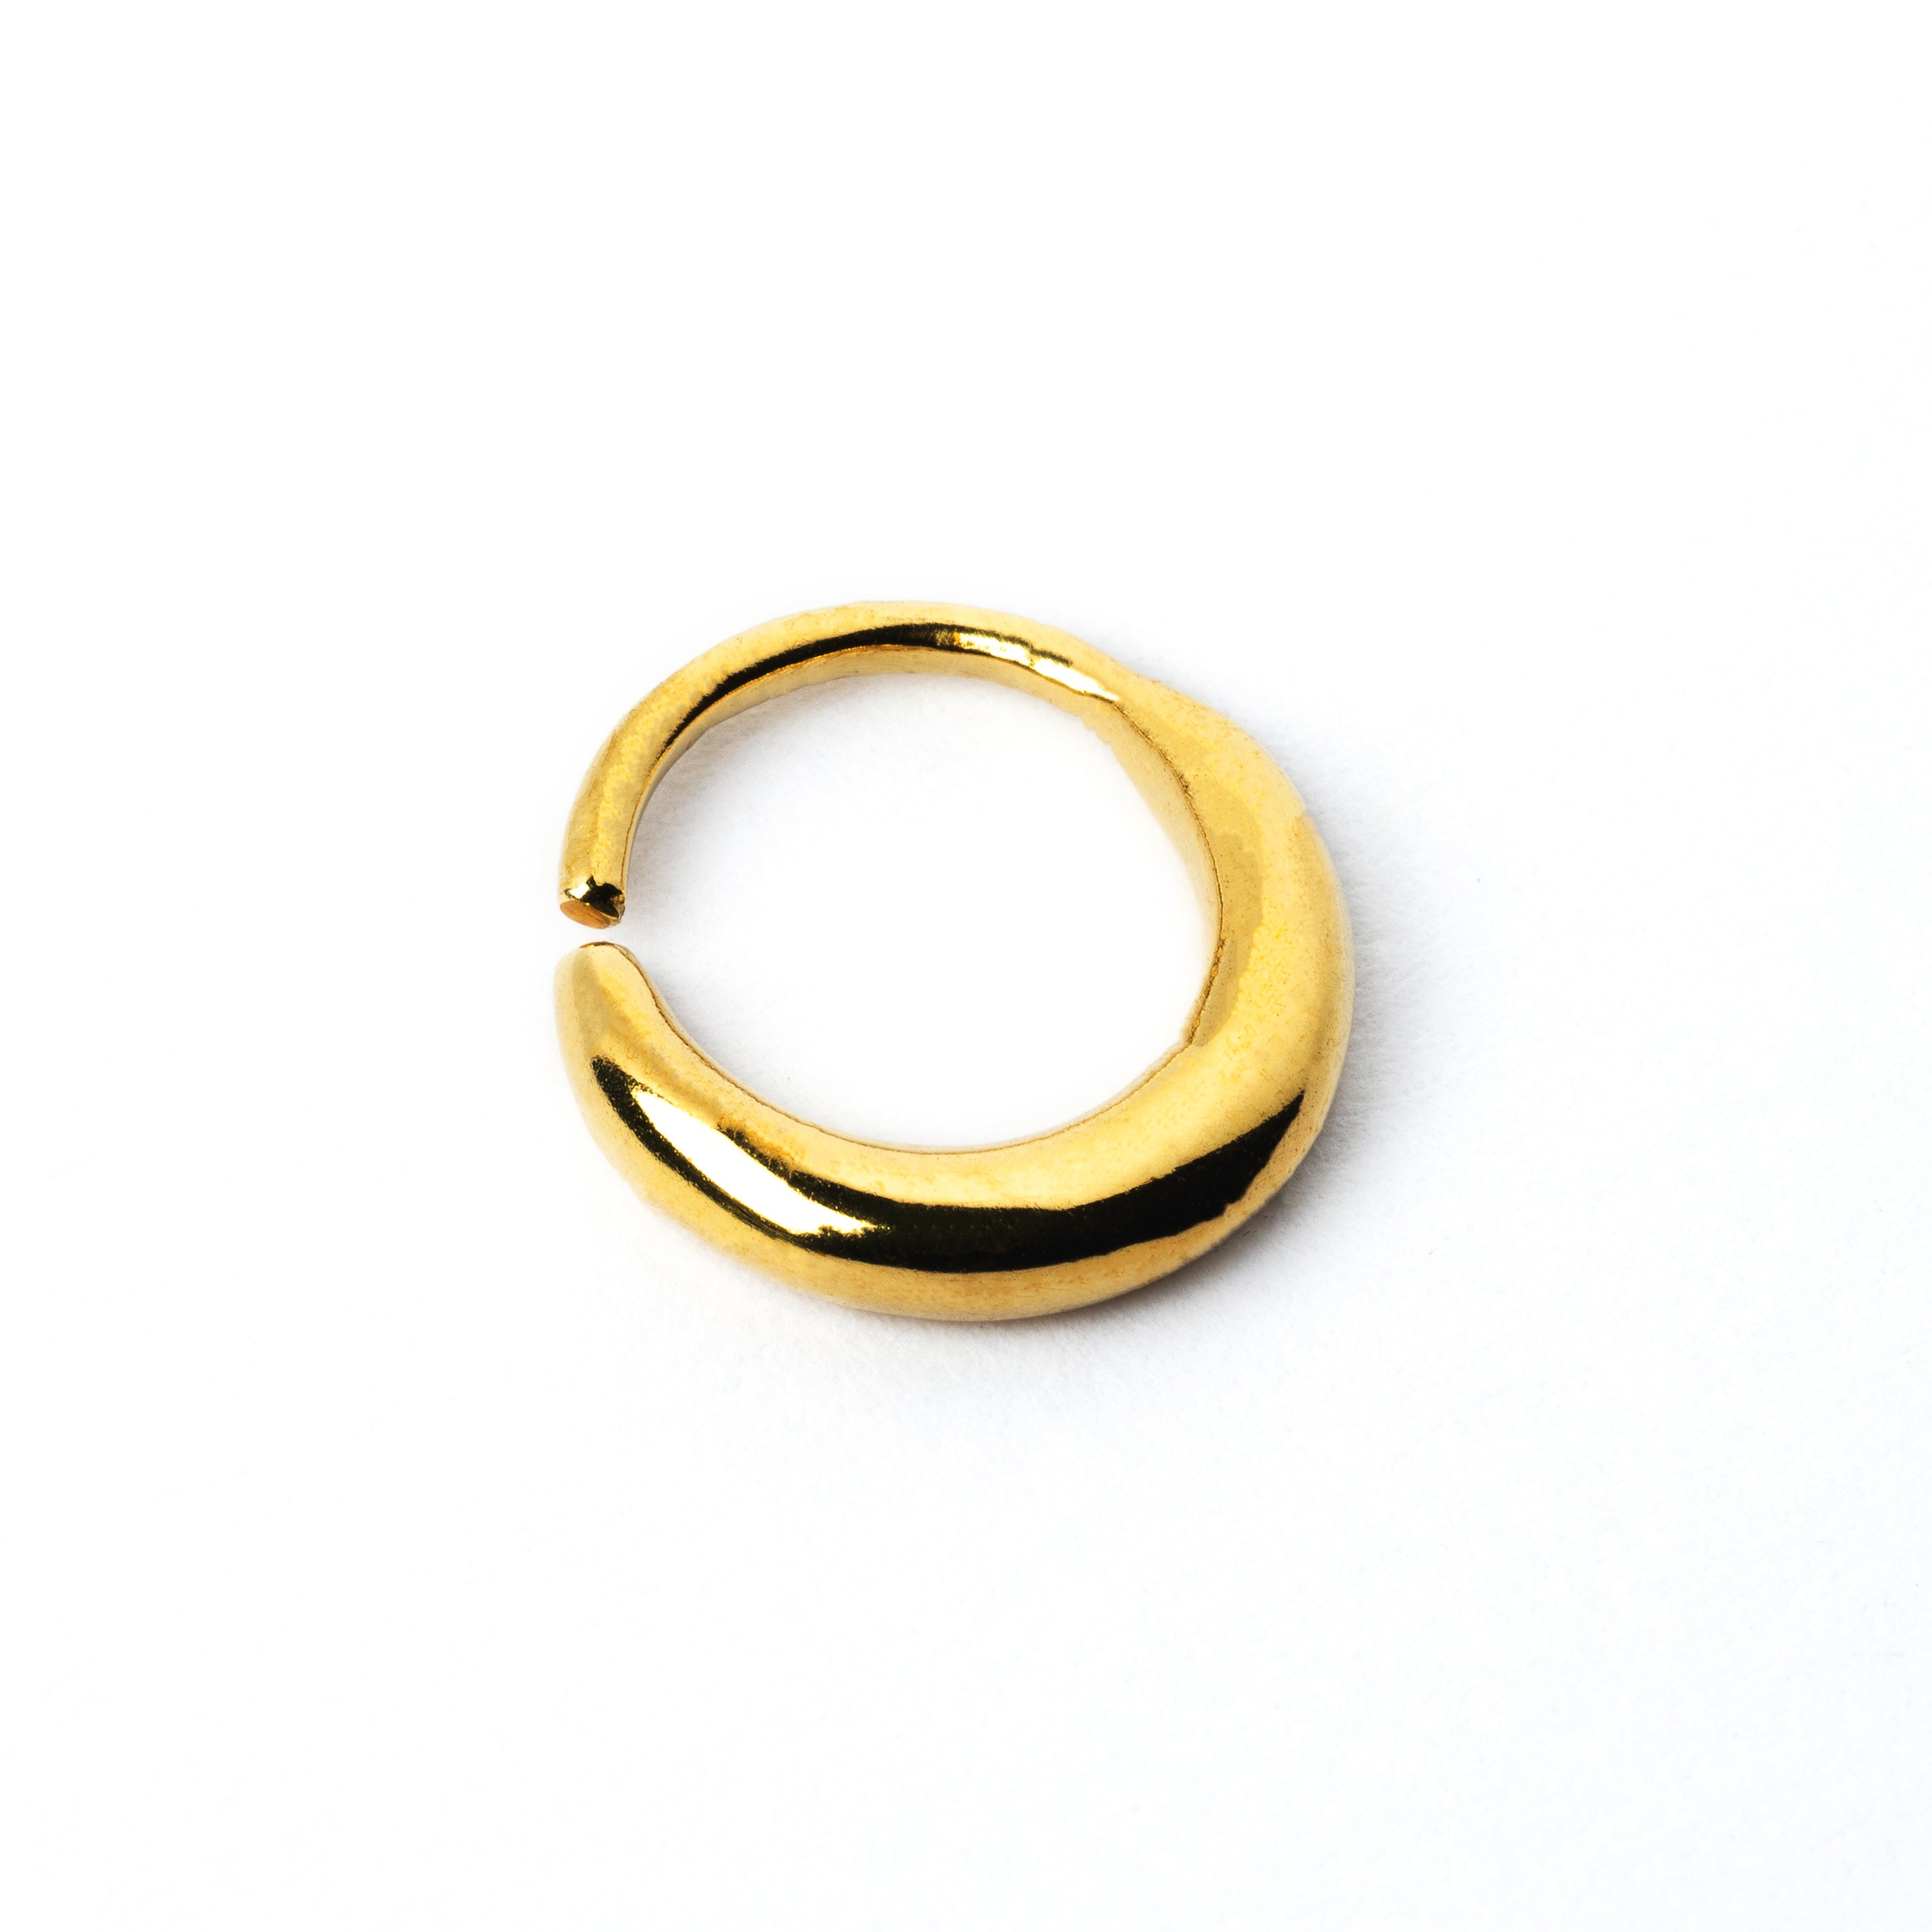 golden brass Rajasthan septum ring left side view